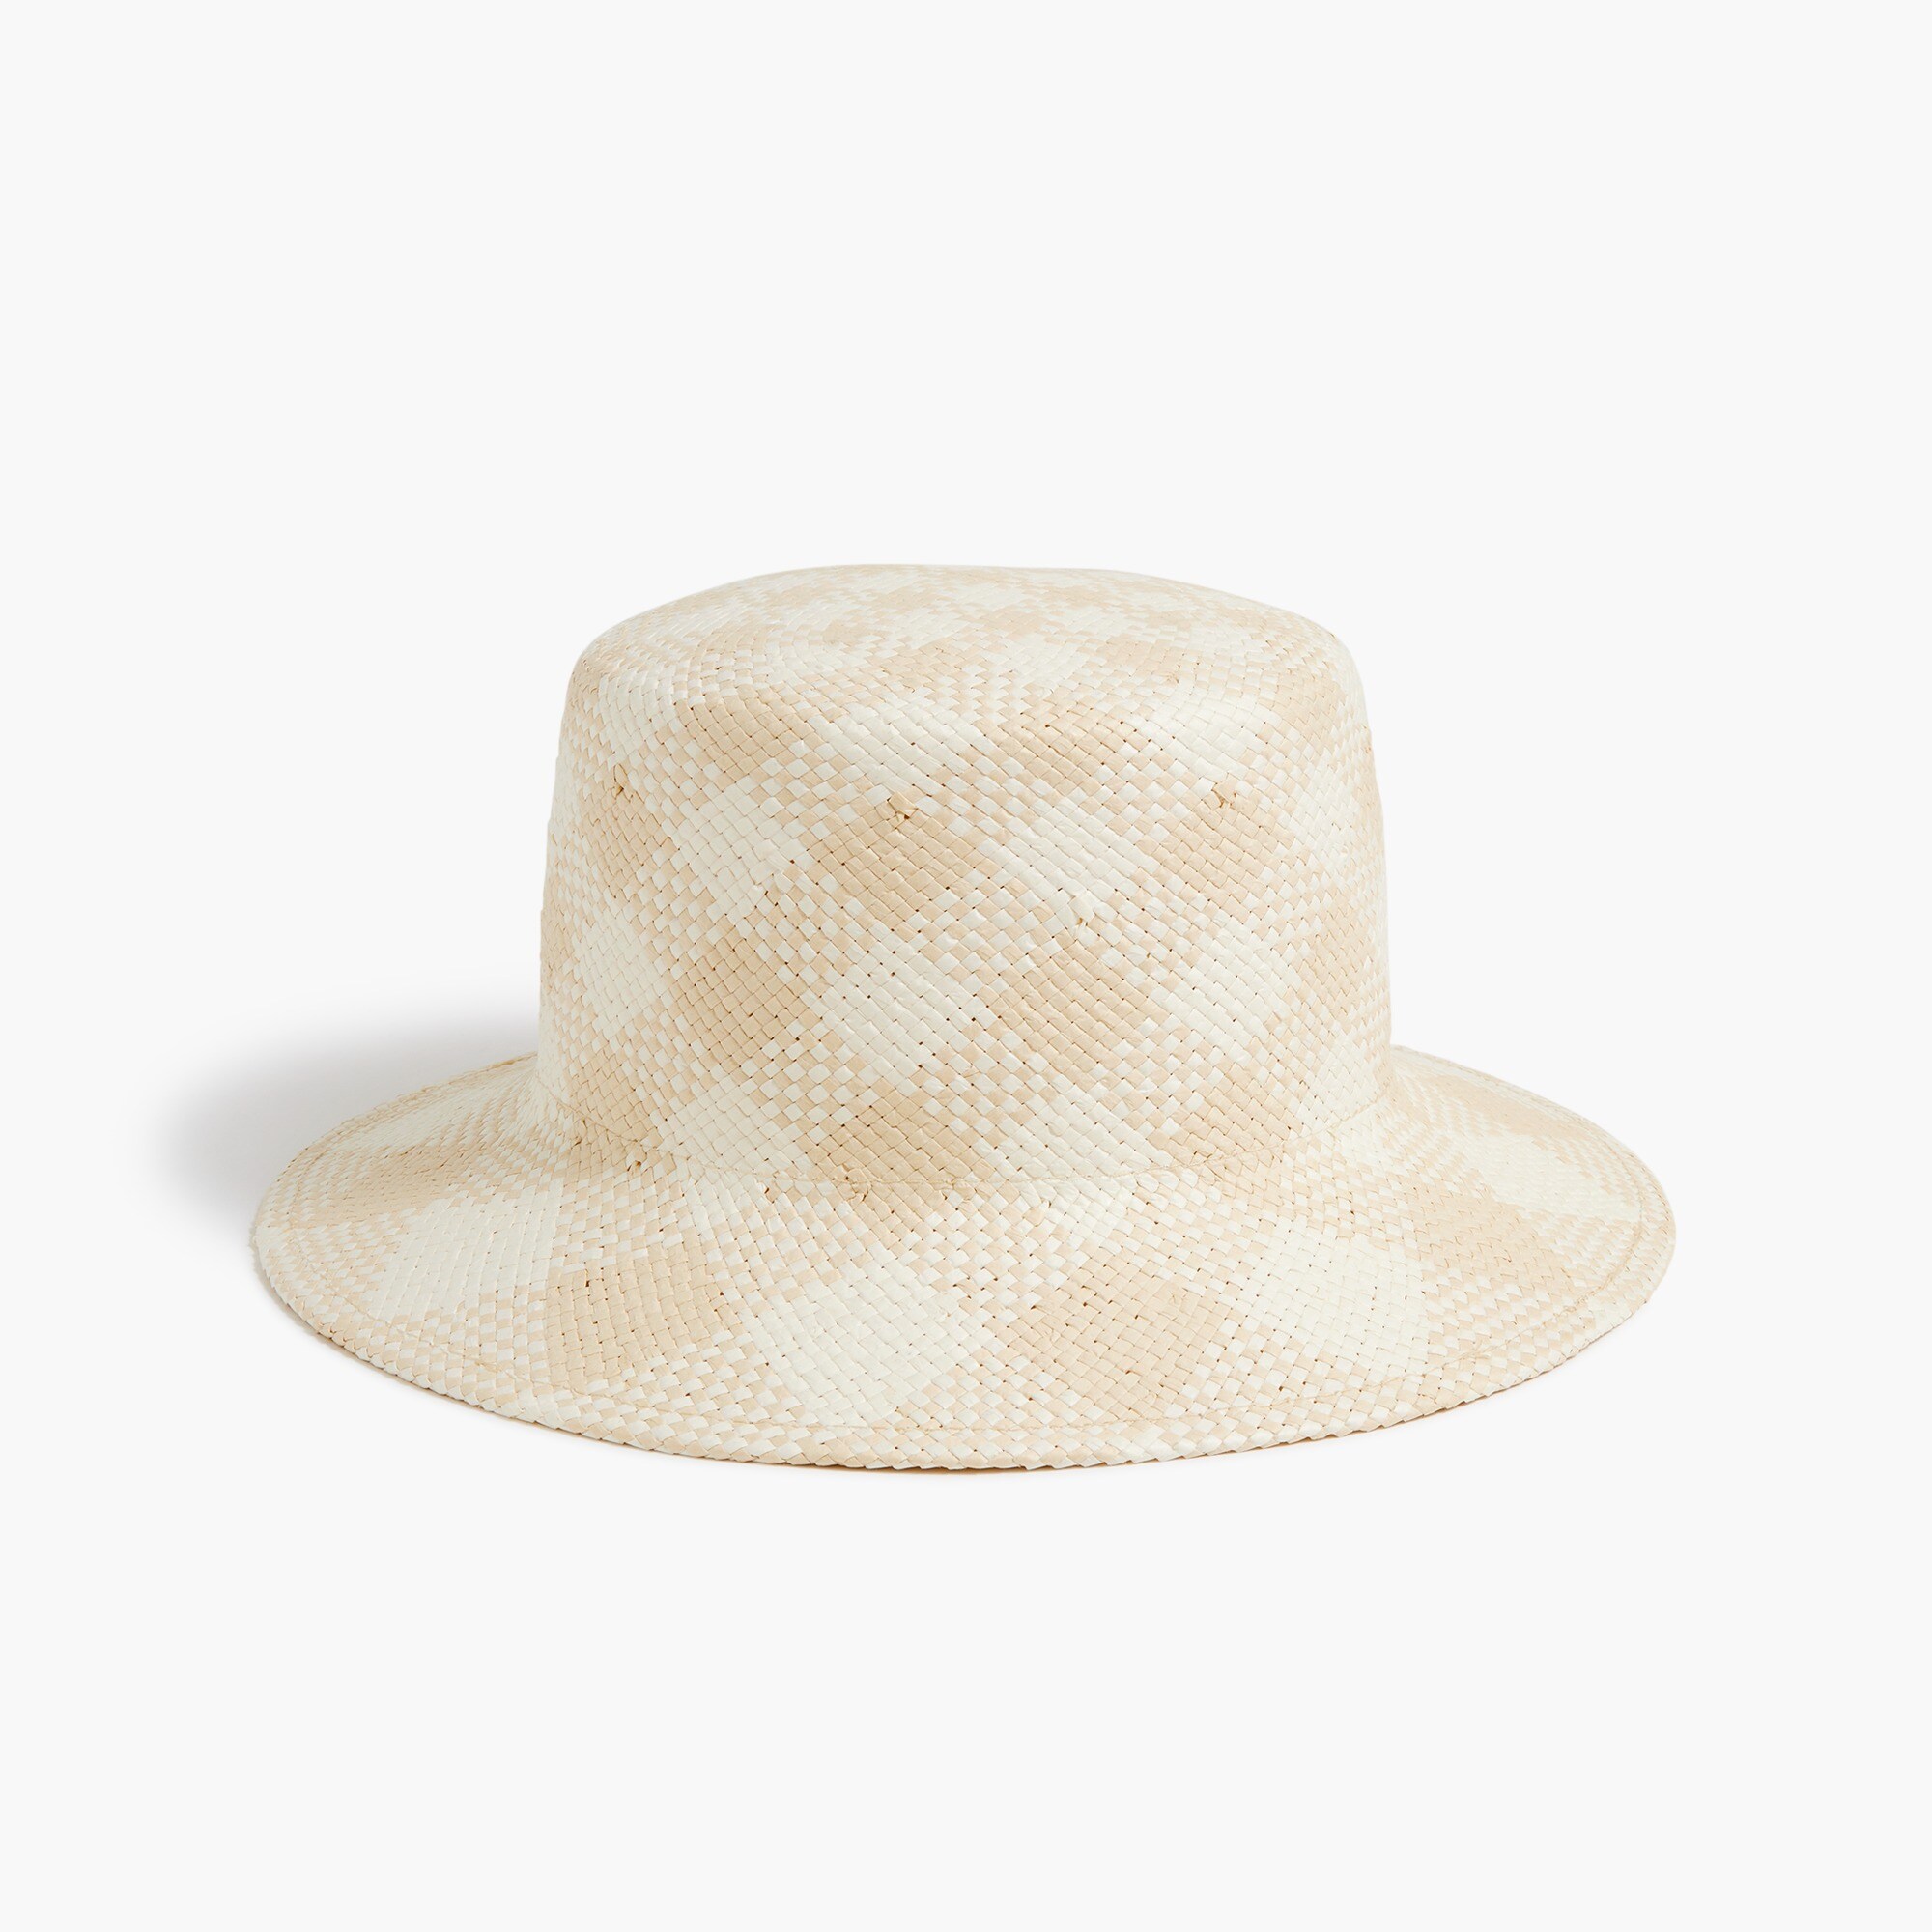  Gingham straw bucket hat